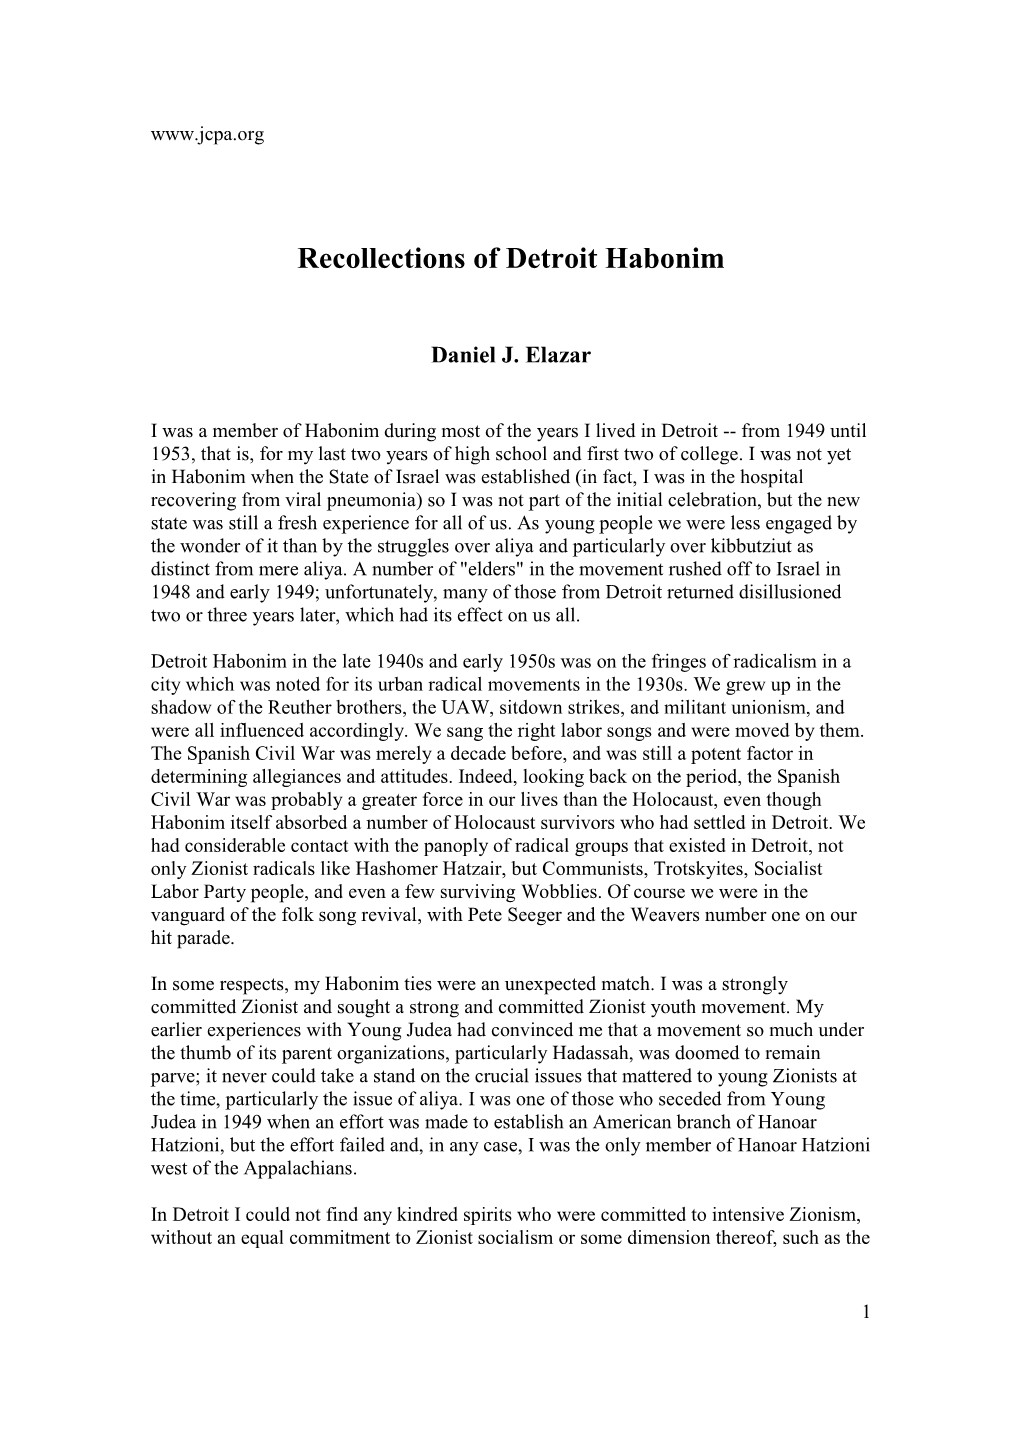 Recollections of Detroit Habonim